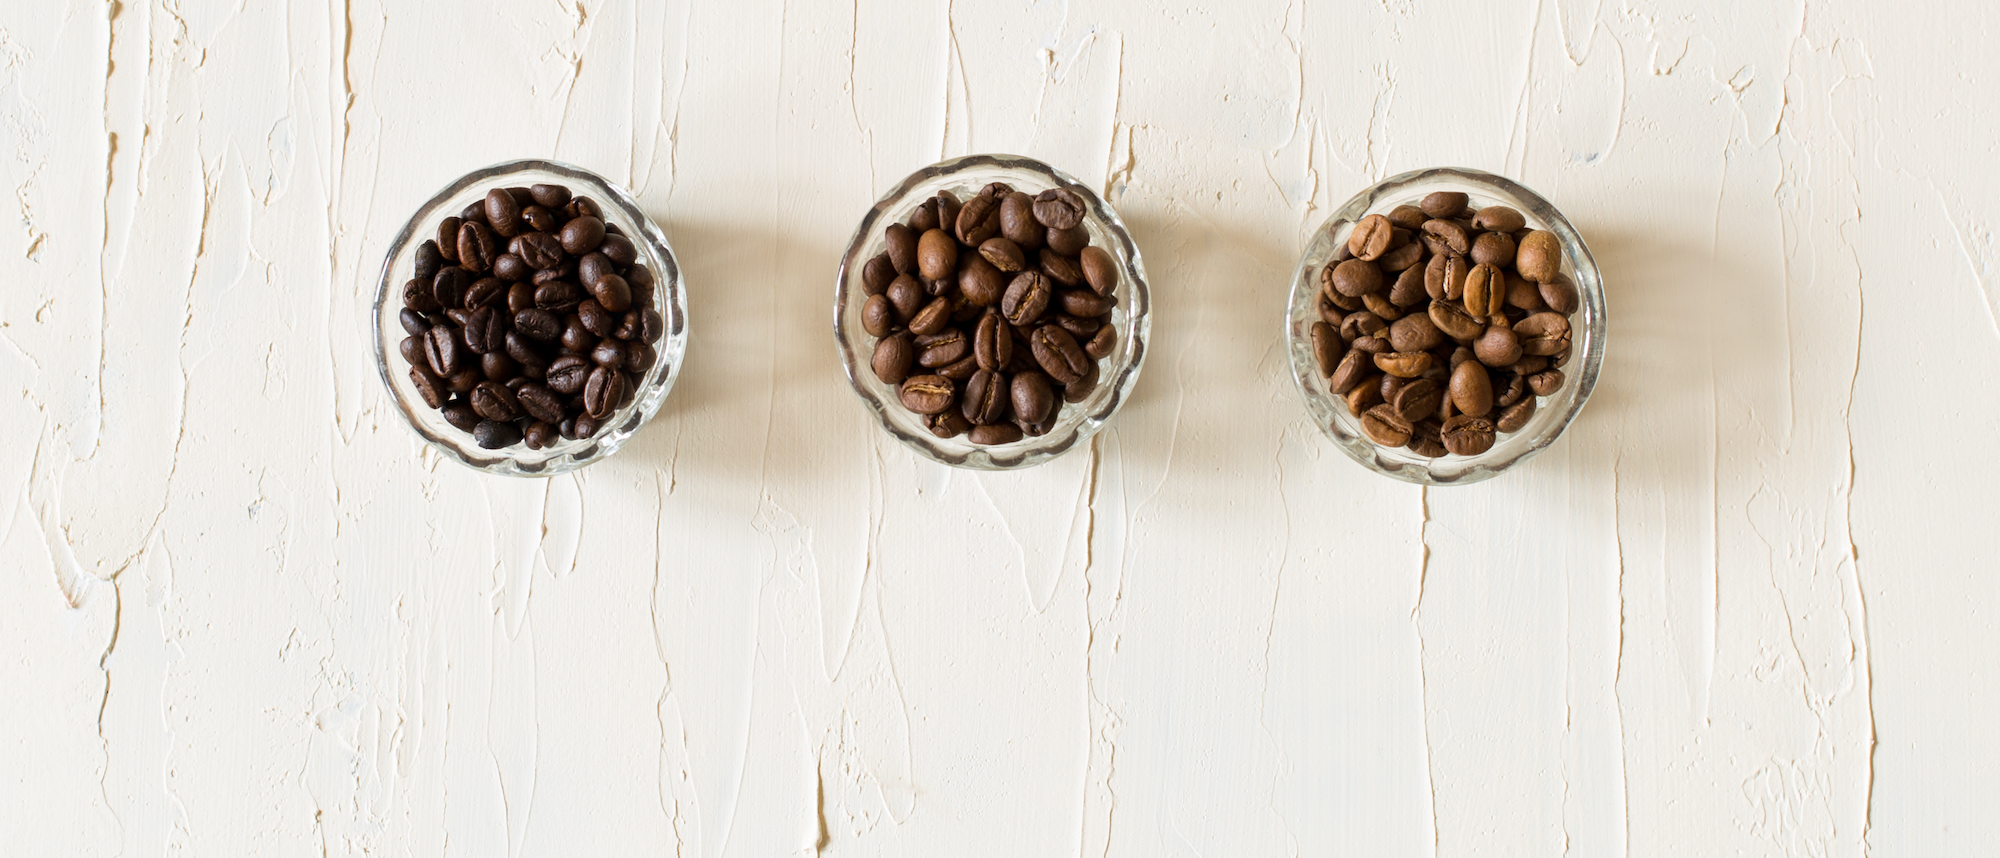 Does Light Or Dark Roast Have More Caffeine